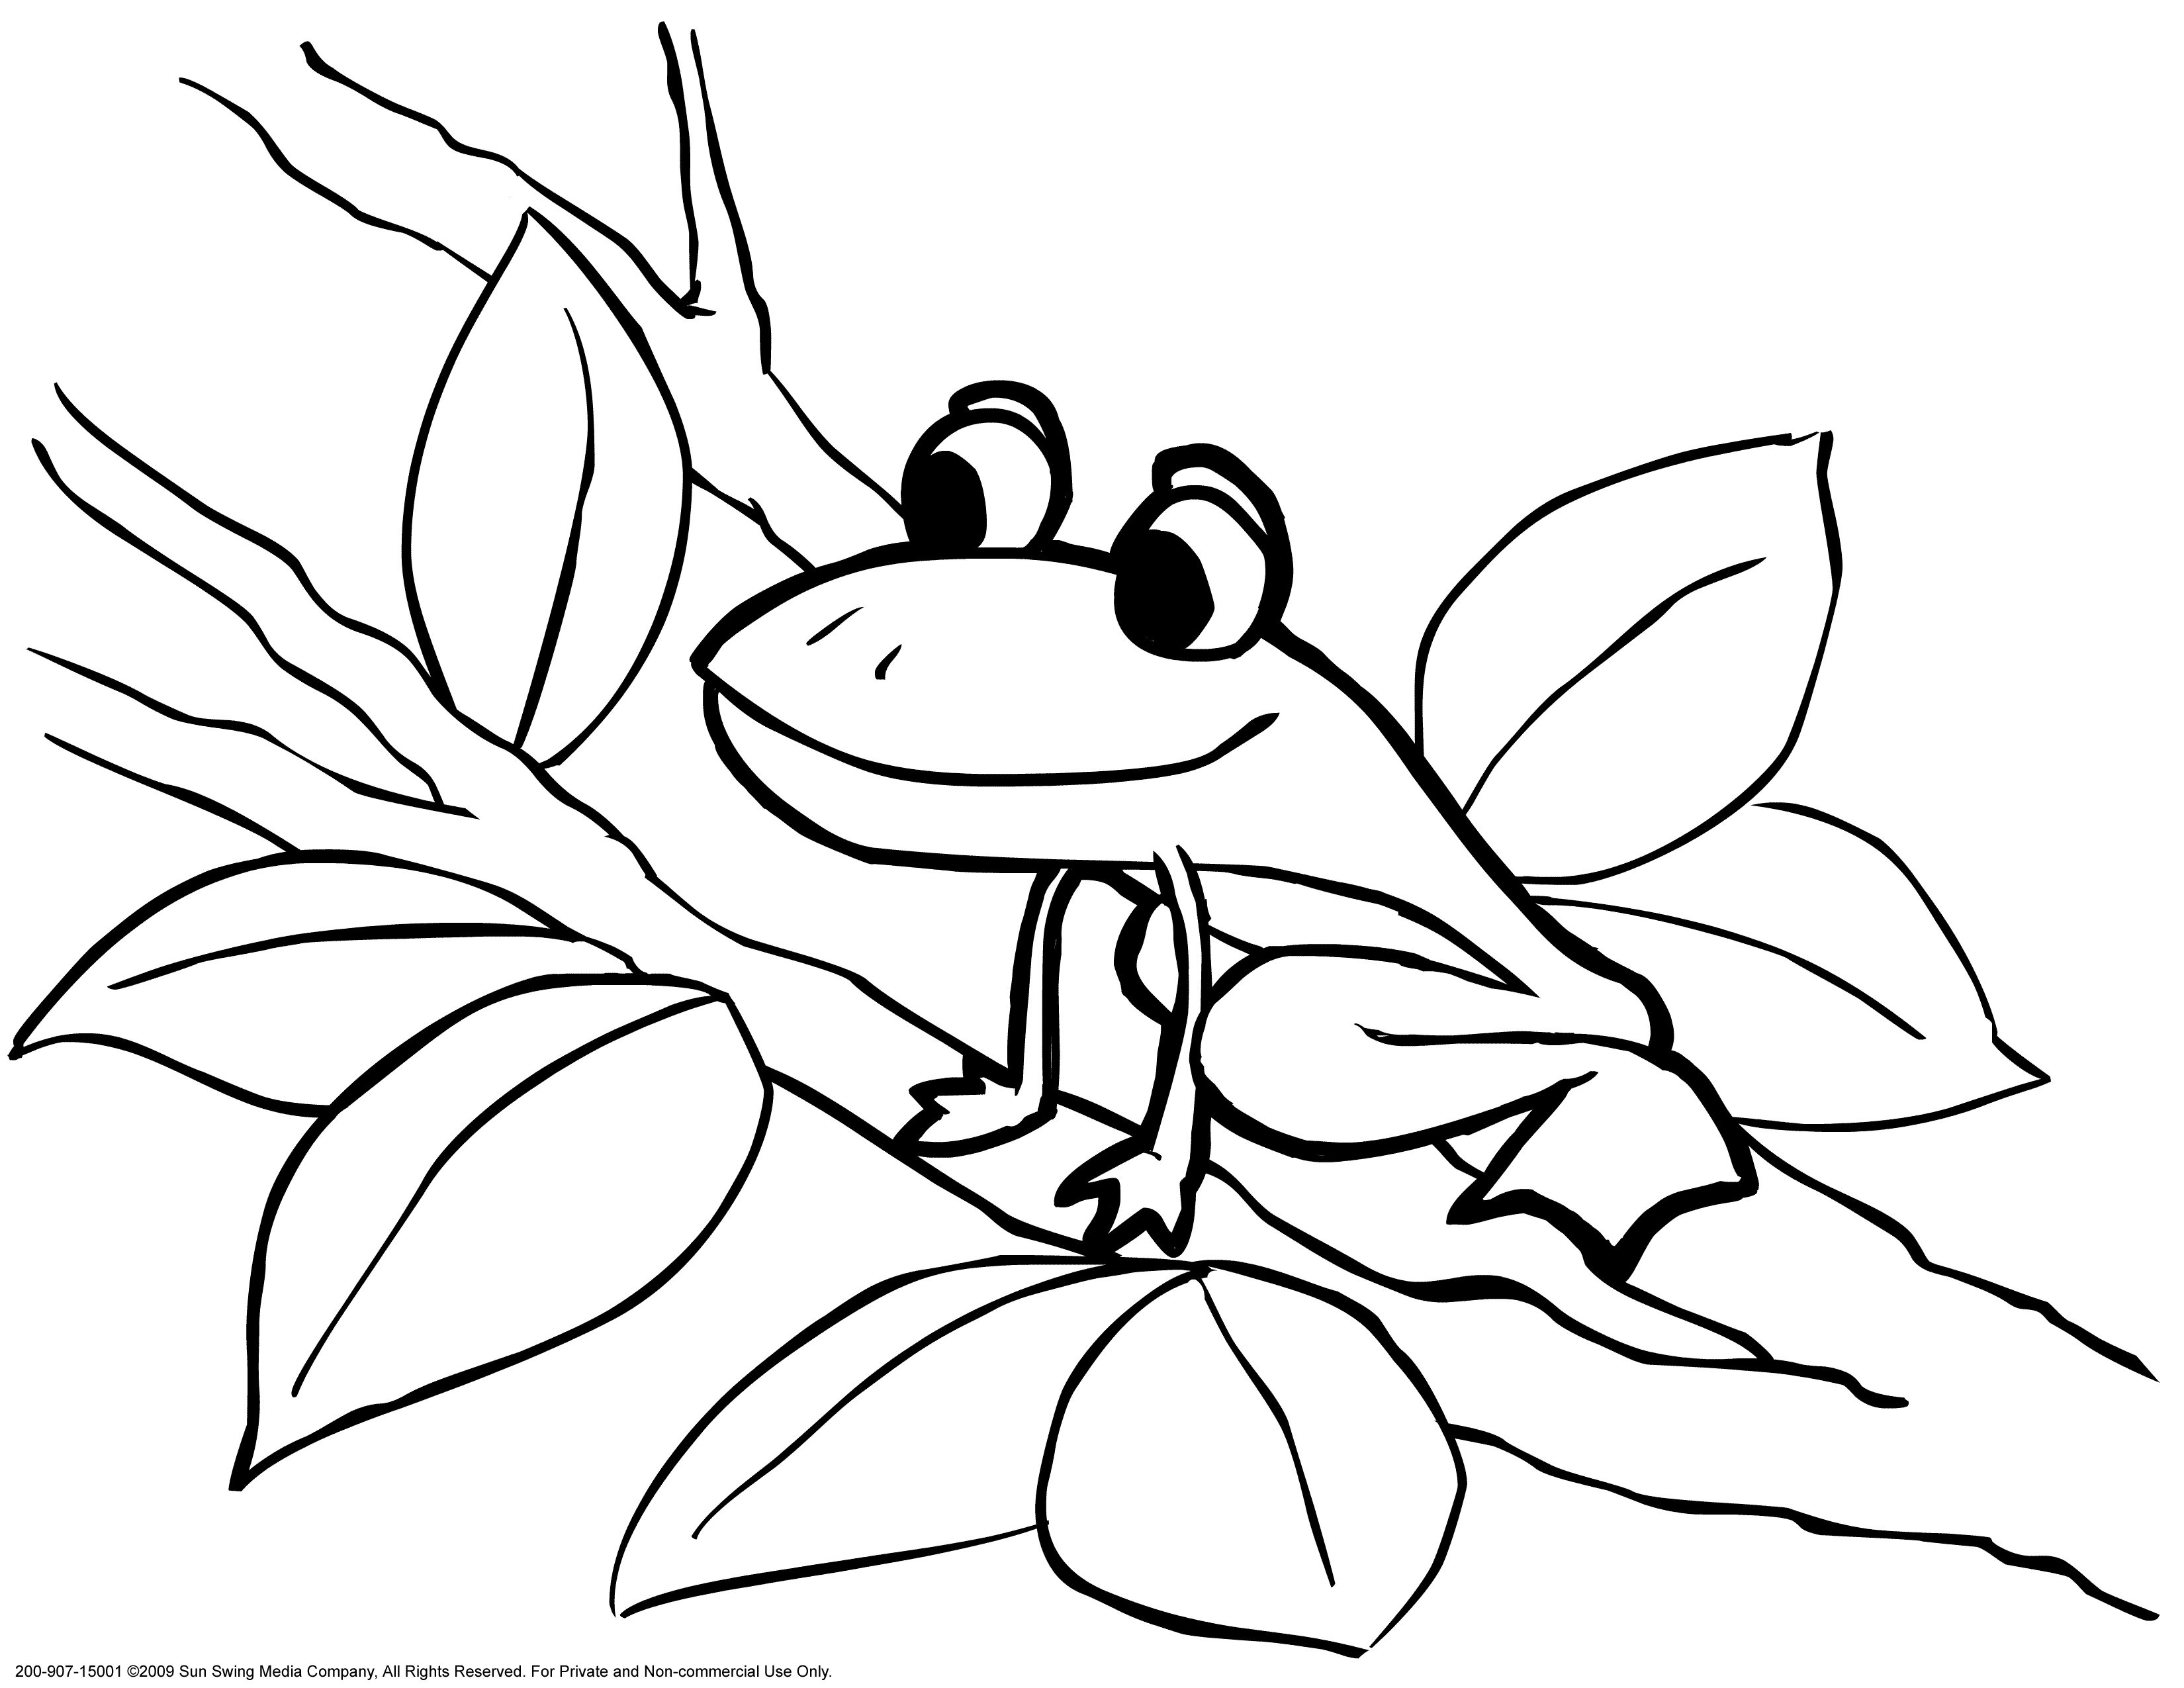 Clown Frog coloring #4, Download drawings